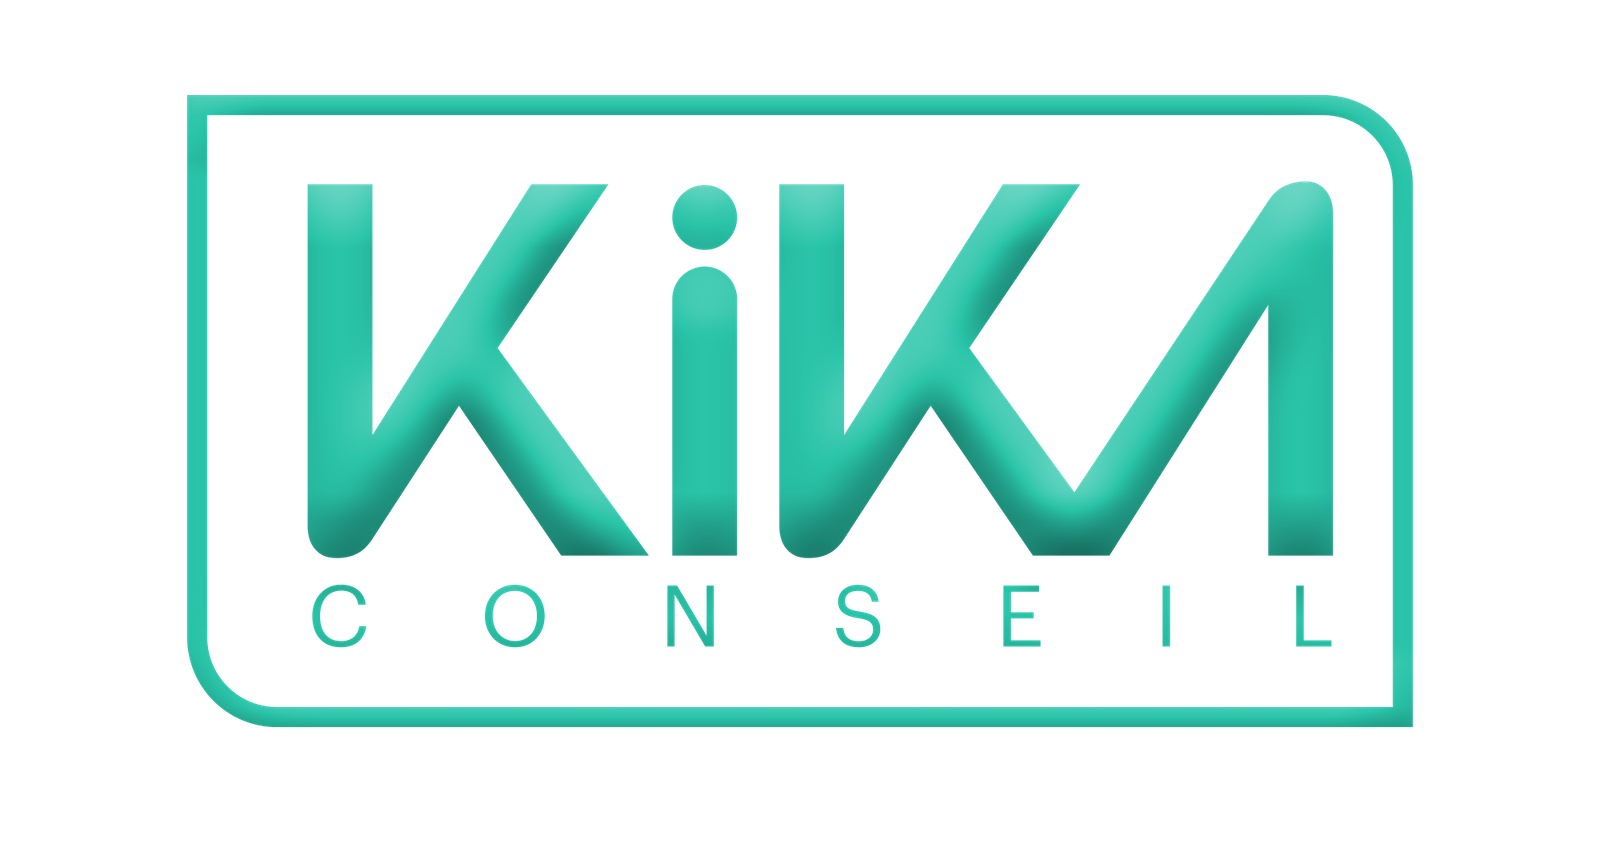 KIKA conseil agence de communication et digital marketing